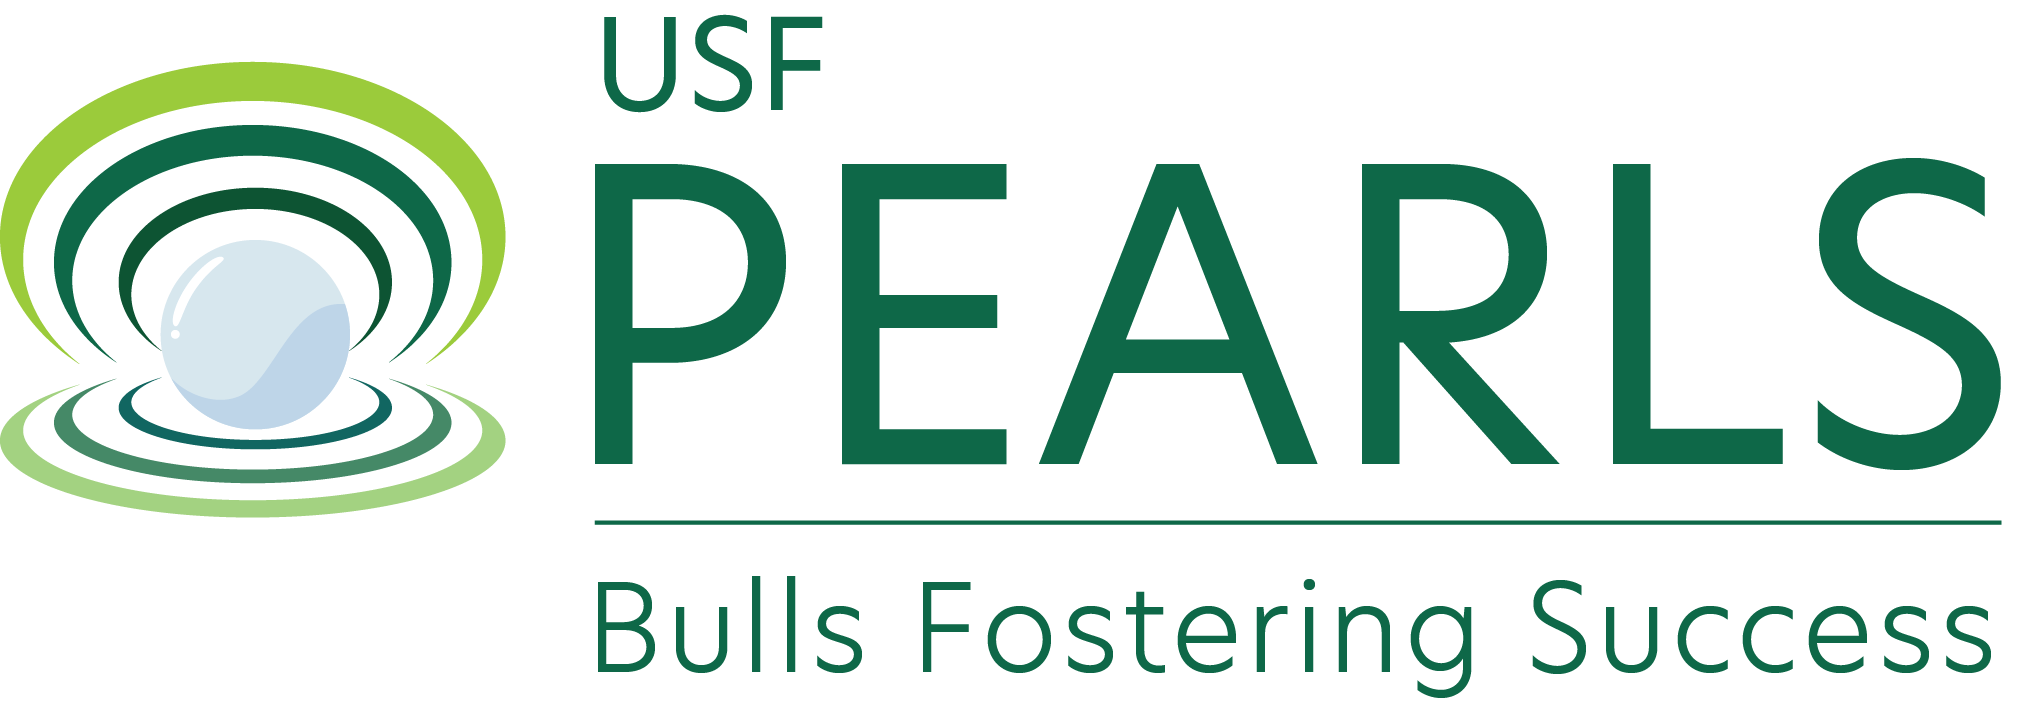 usf pearls logo